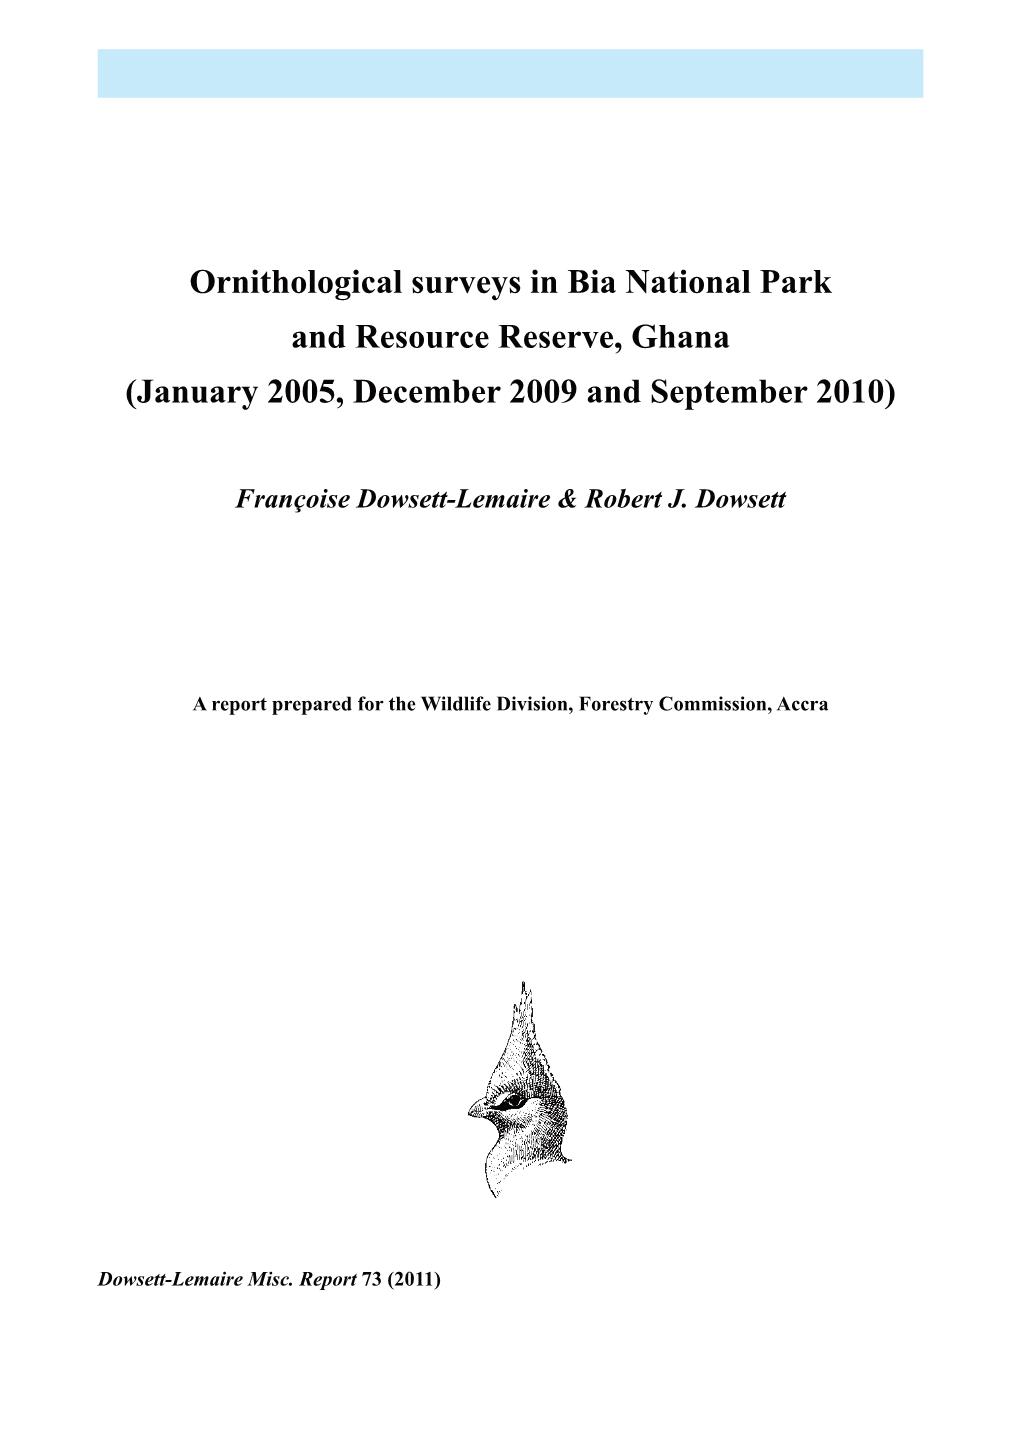 Ornithological Surveys in Bia National Park and Resource Reserve, Ghana (January 2005, December 2009 and September 2010)